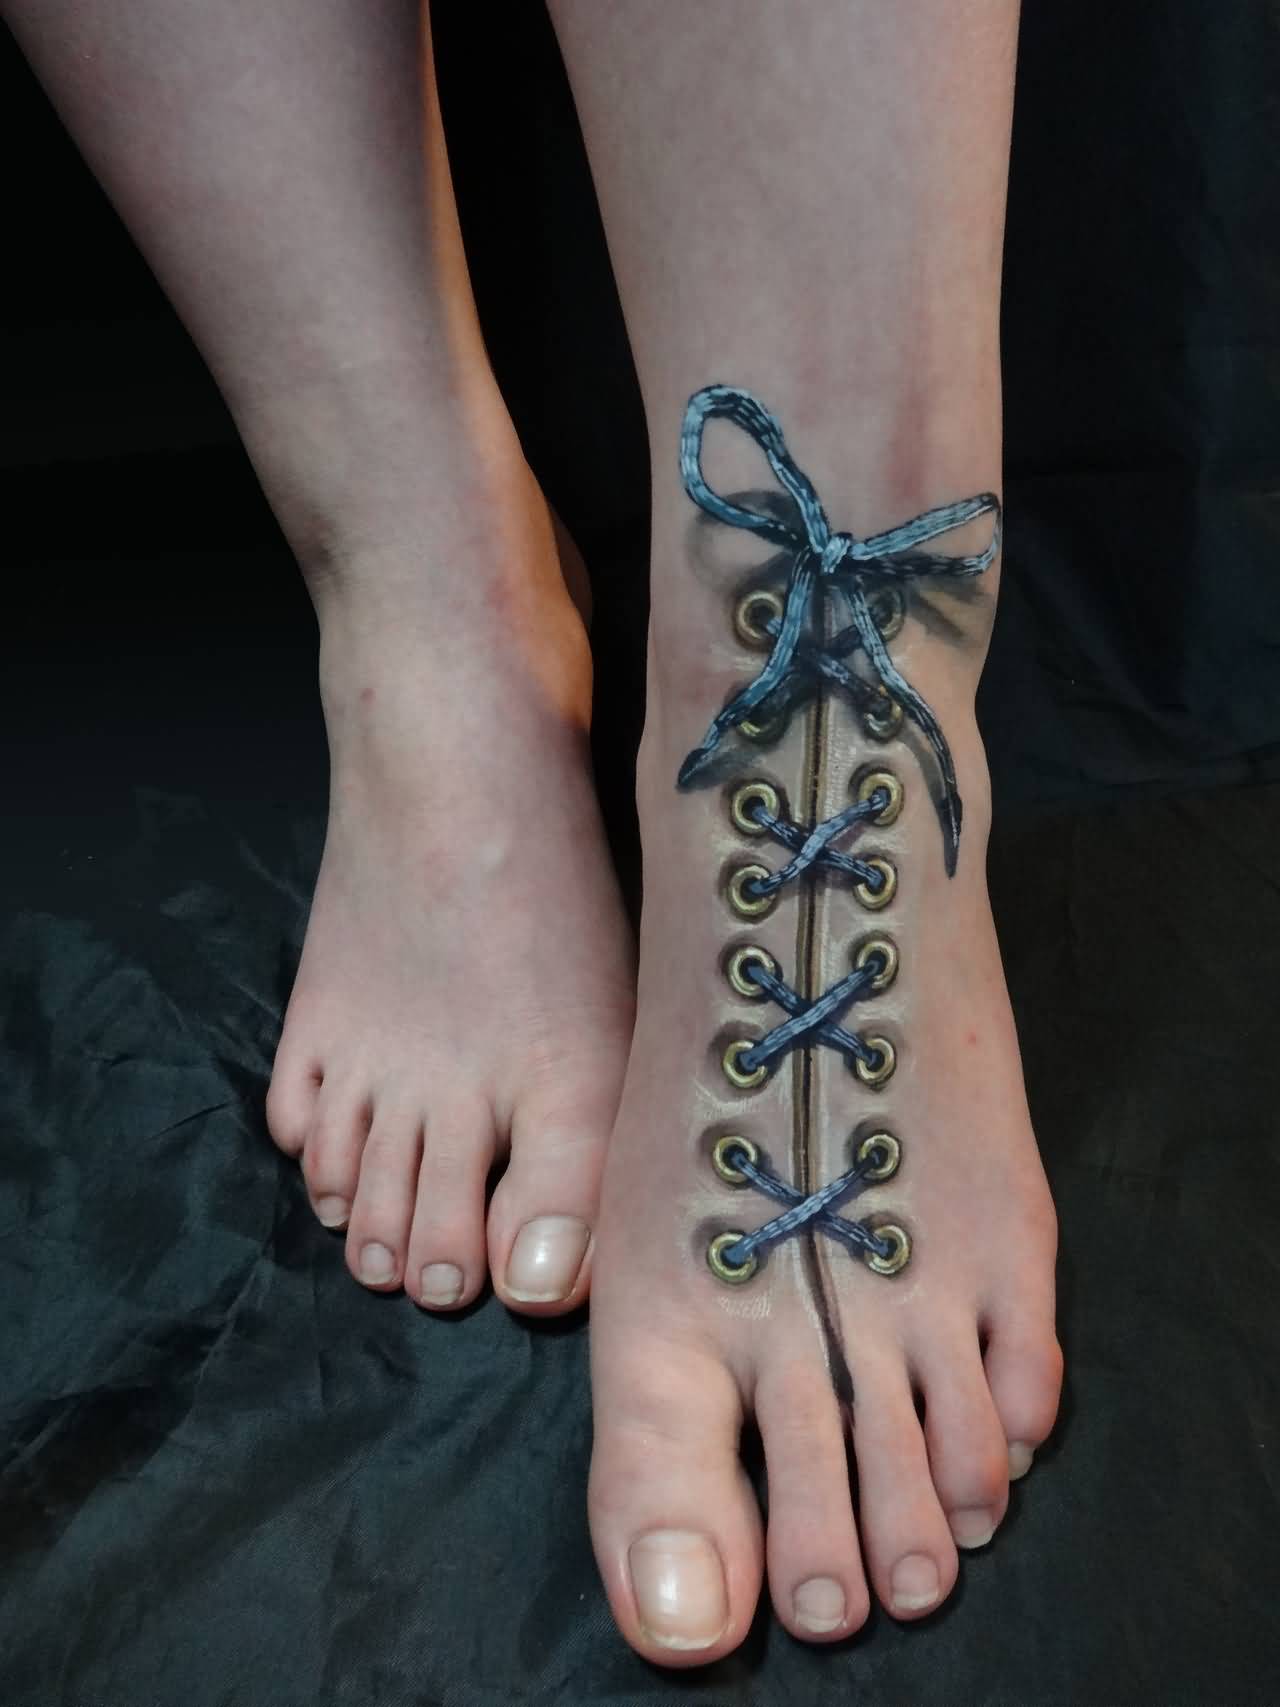 Amazing 3D Illusion Foot Tattoo